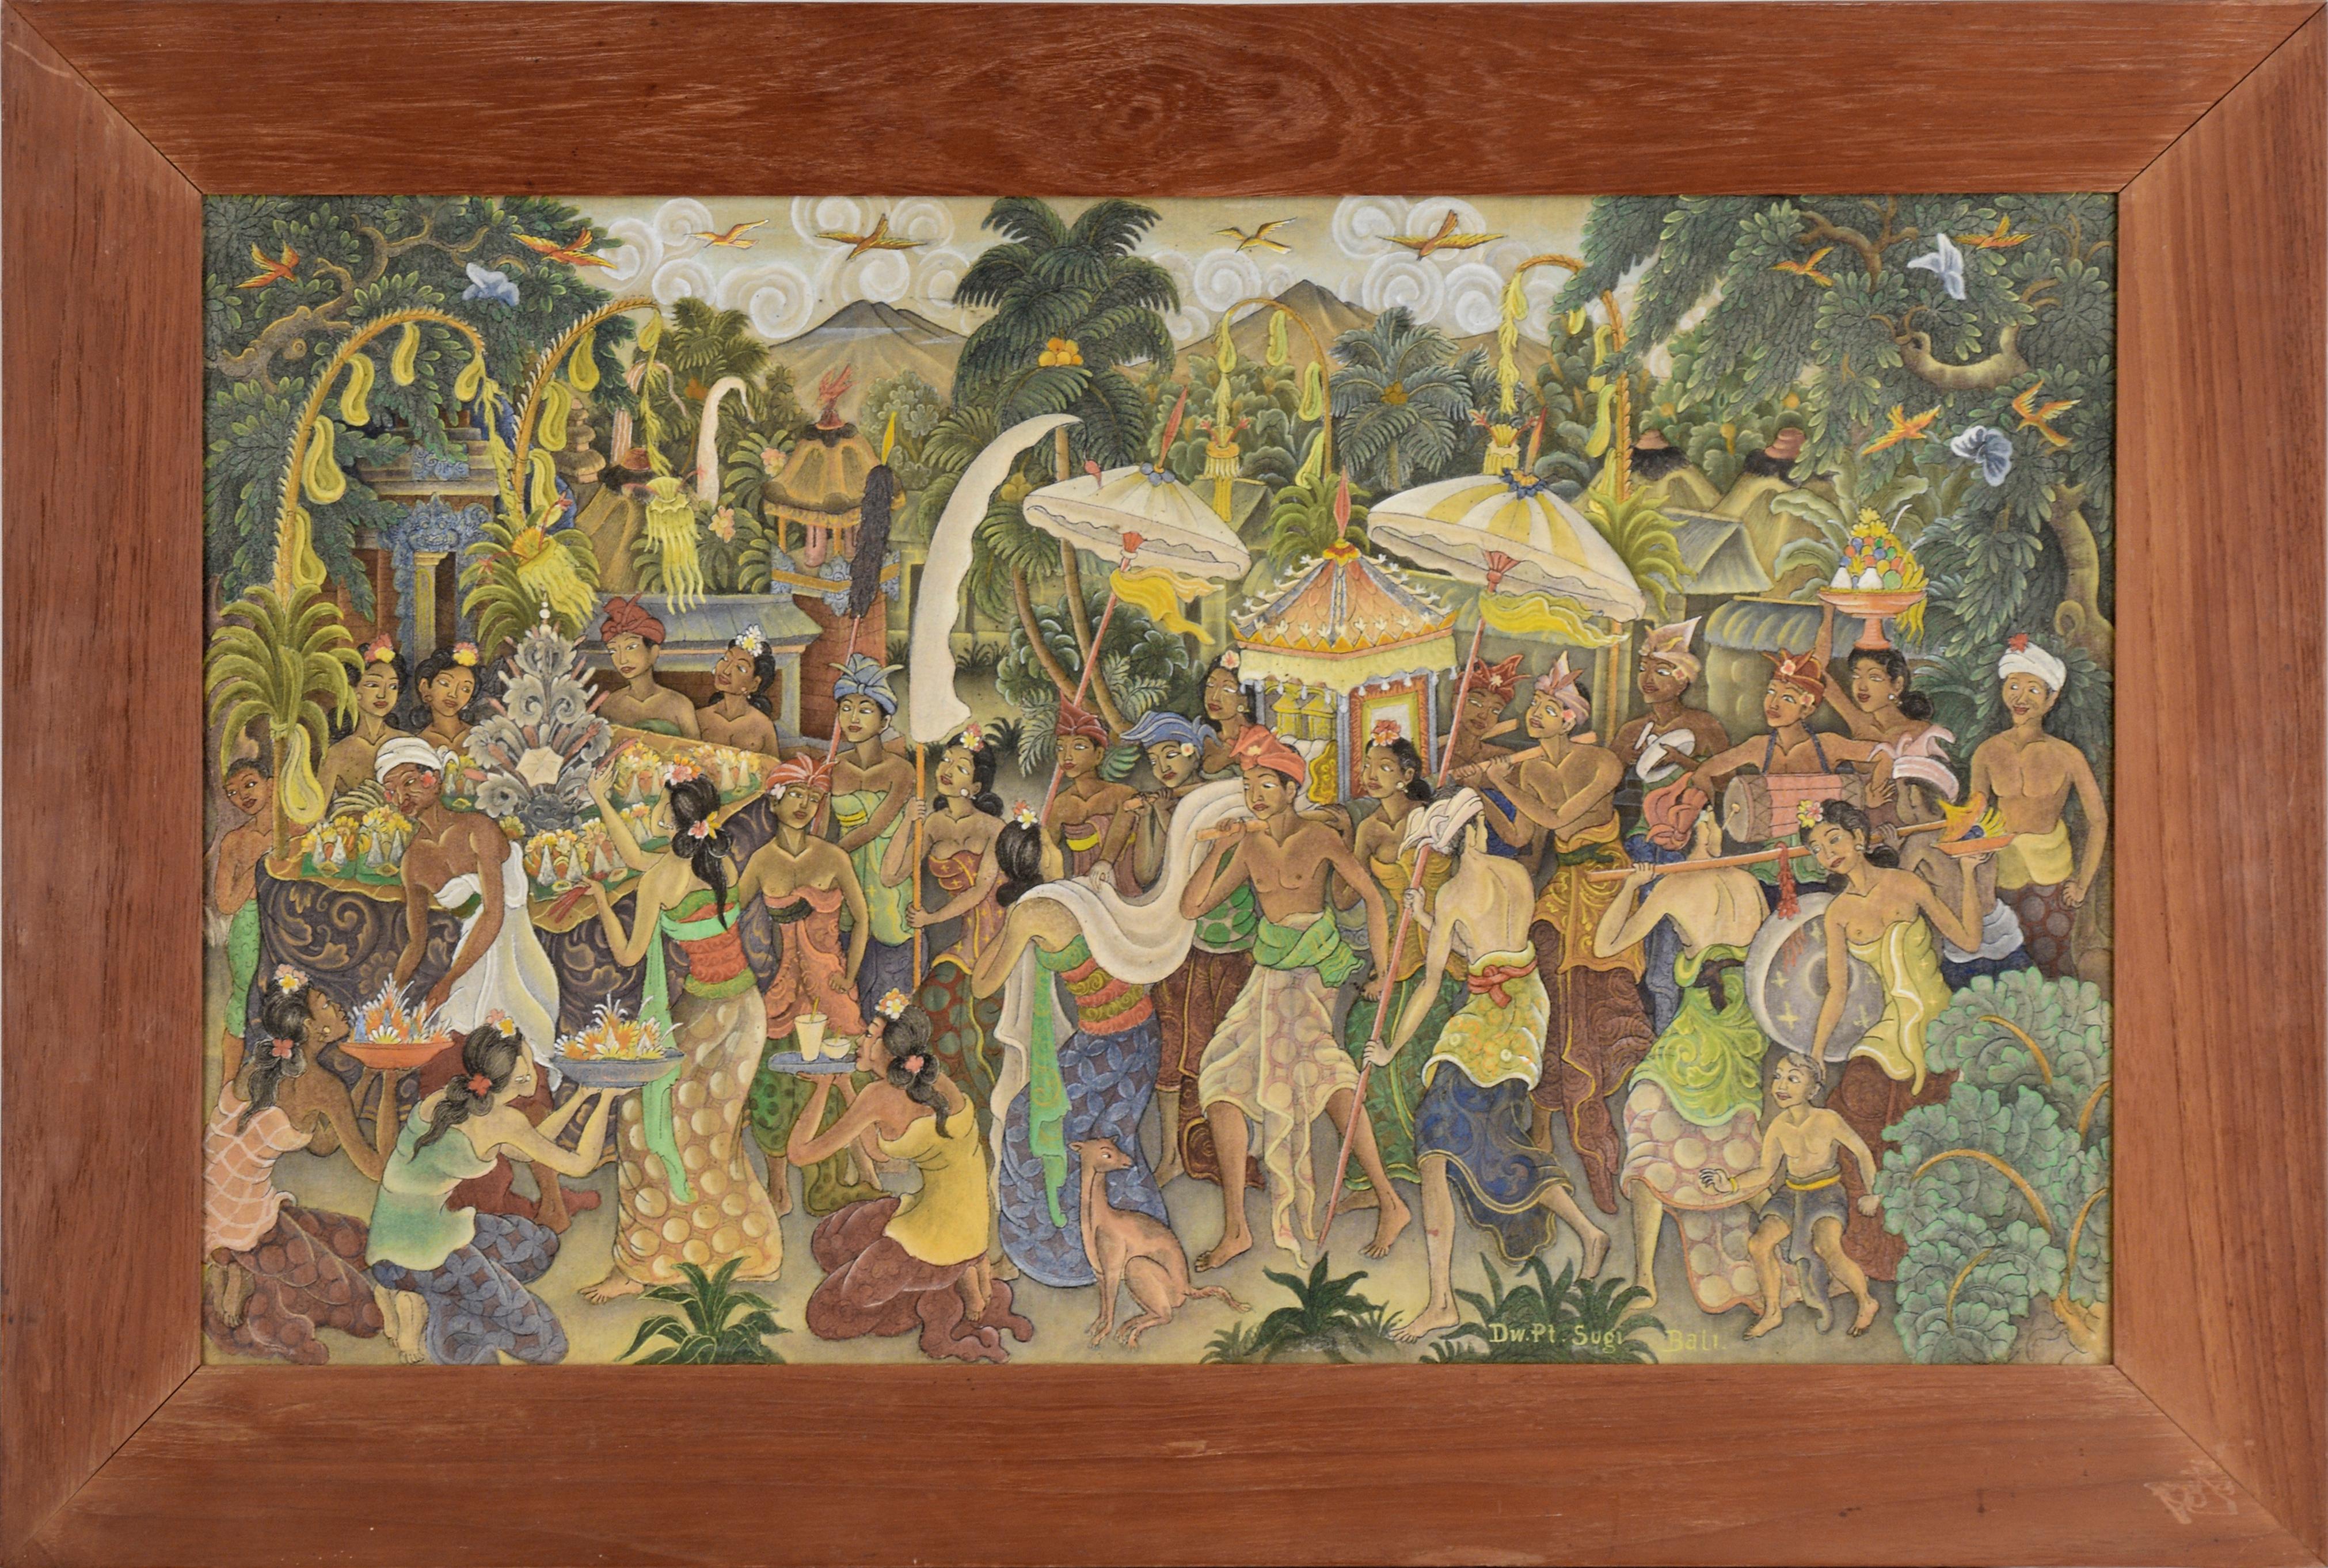 I Dewa Putu Sugi Landscape Painting - Bali Jungle Village Procession, Indonesian Figural 